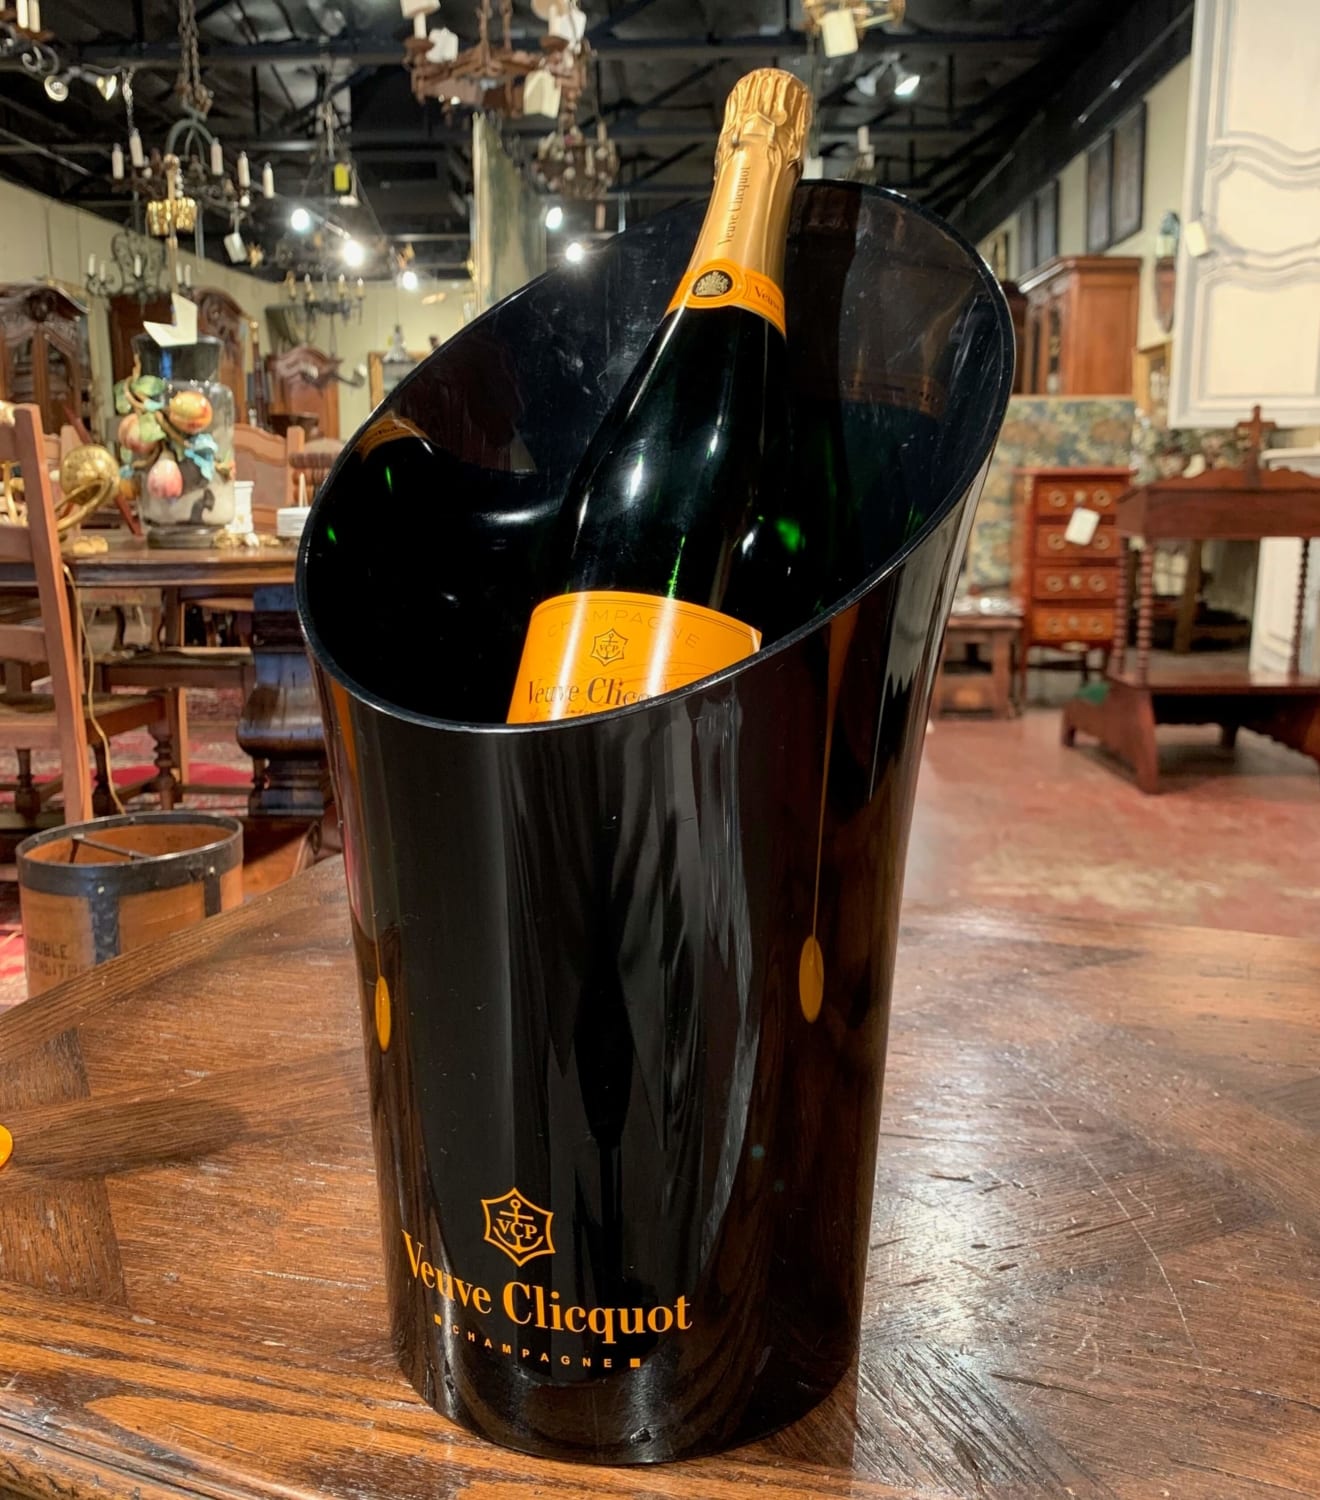 Veuve Clicquot Ponsardin Champagne Bucket Veuve Clicquot 